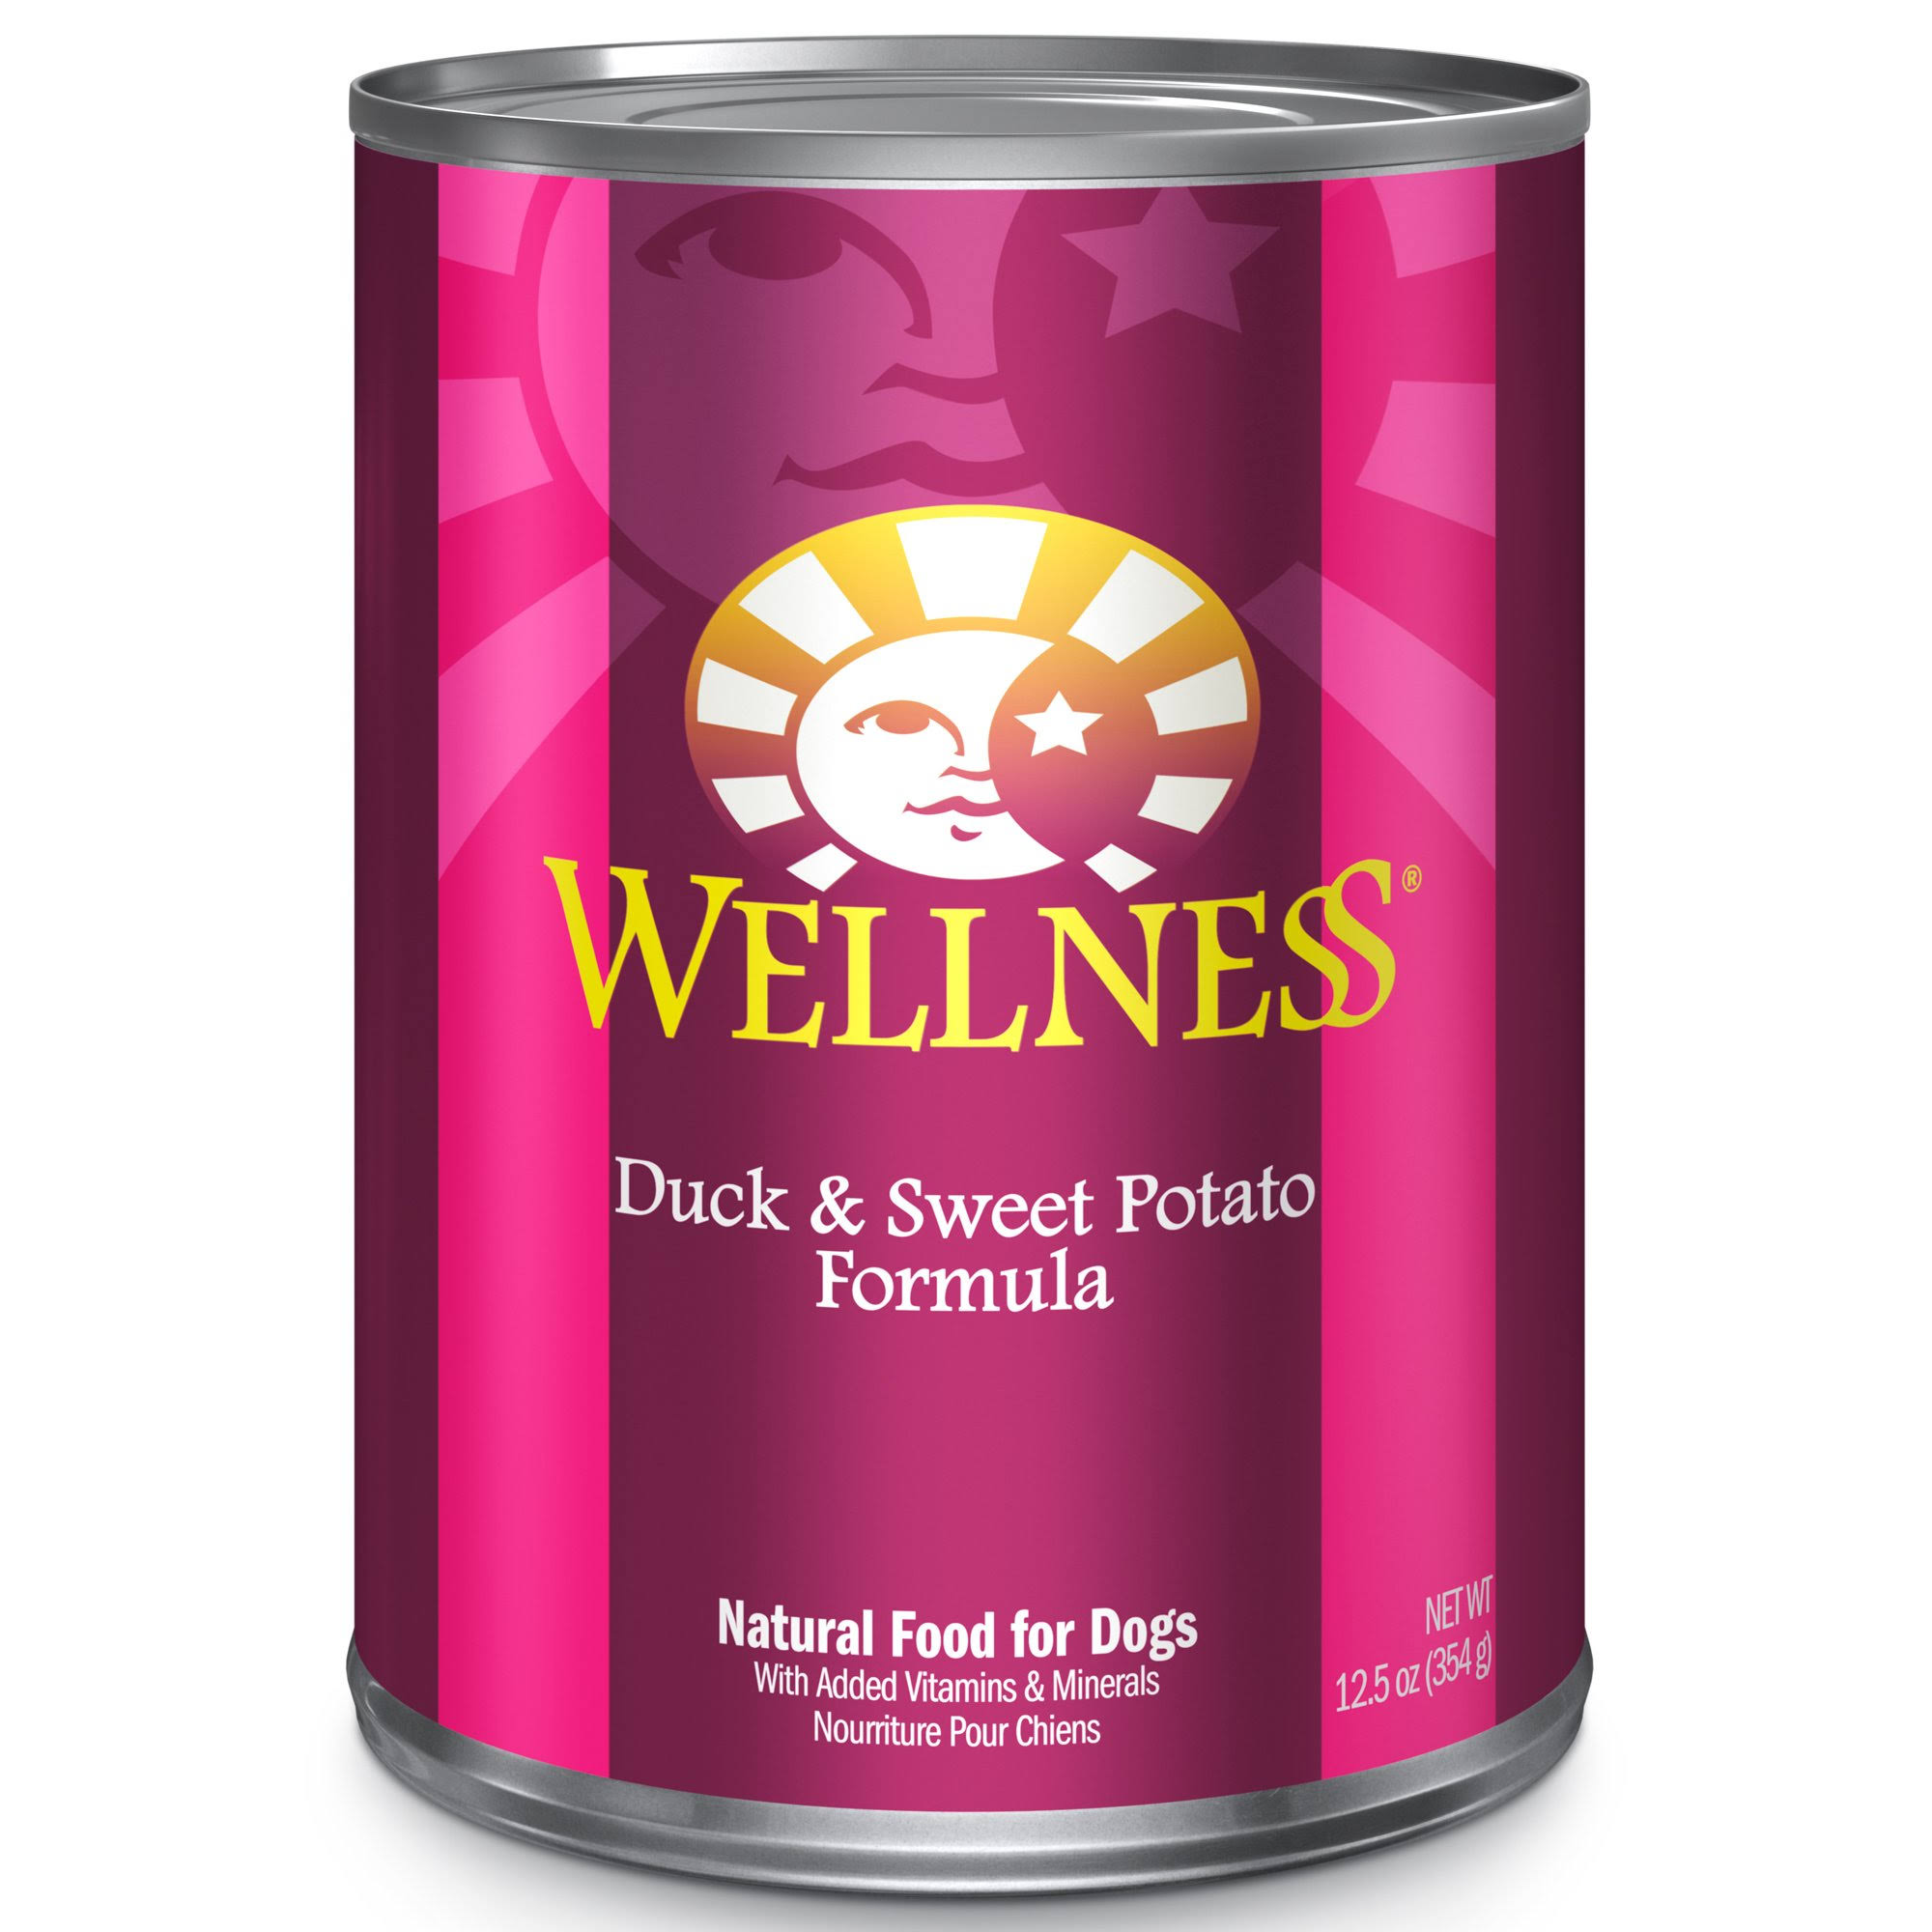 Wellness Natural Food for Dogs - Duck & Sweet Potato Formula